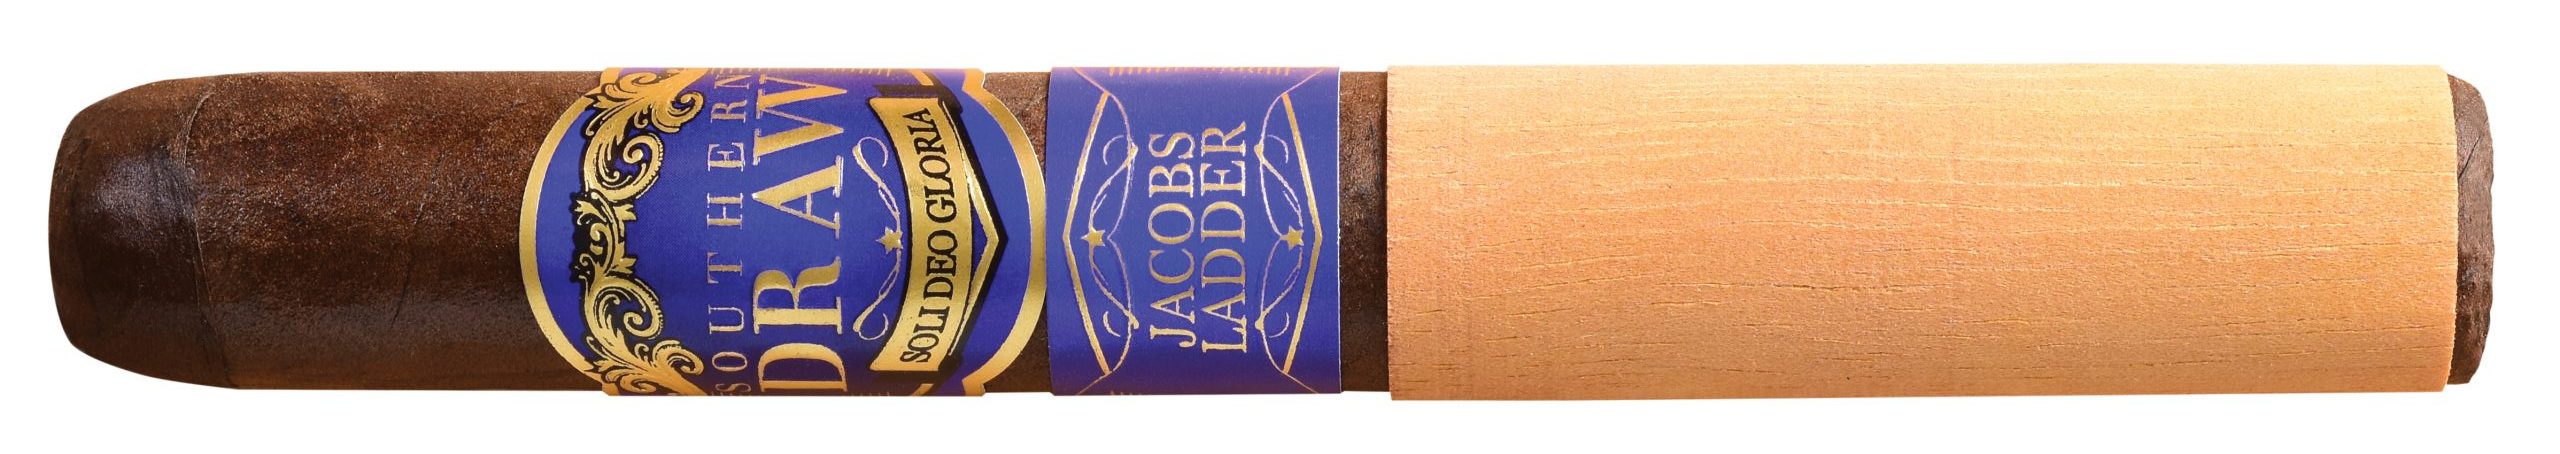 southern draw jacobs ladder toro single cigar